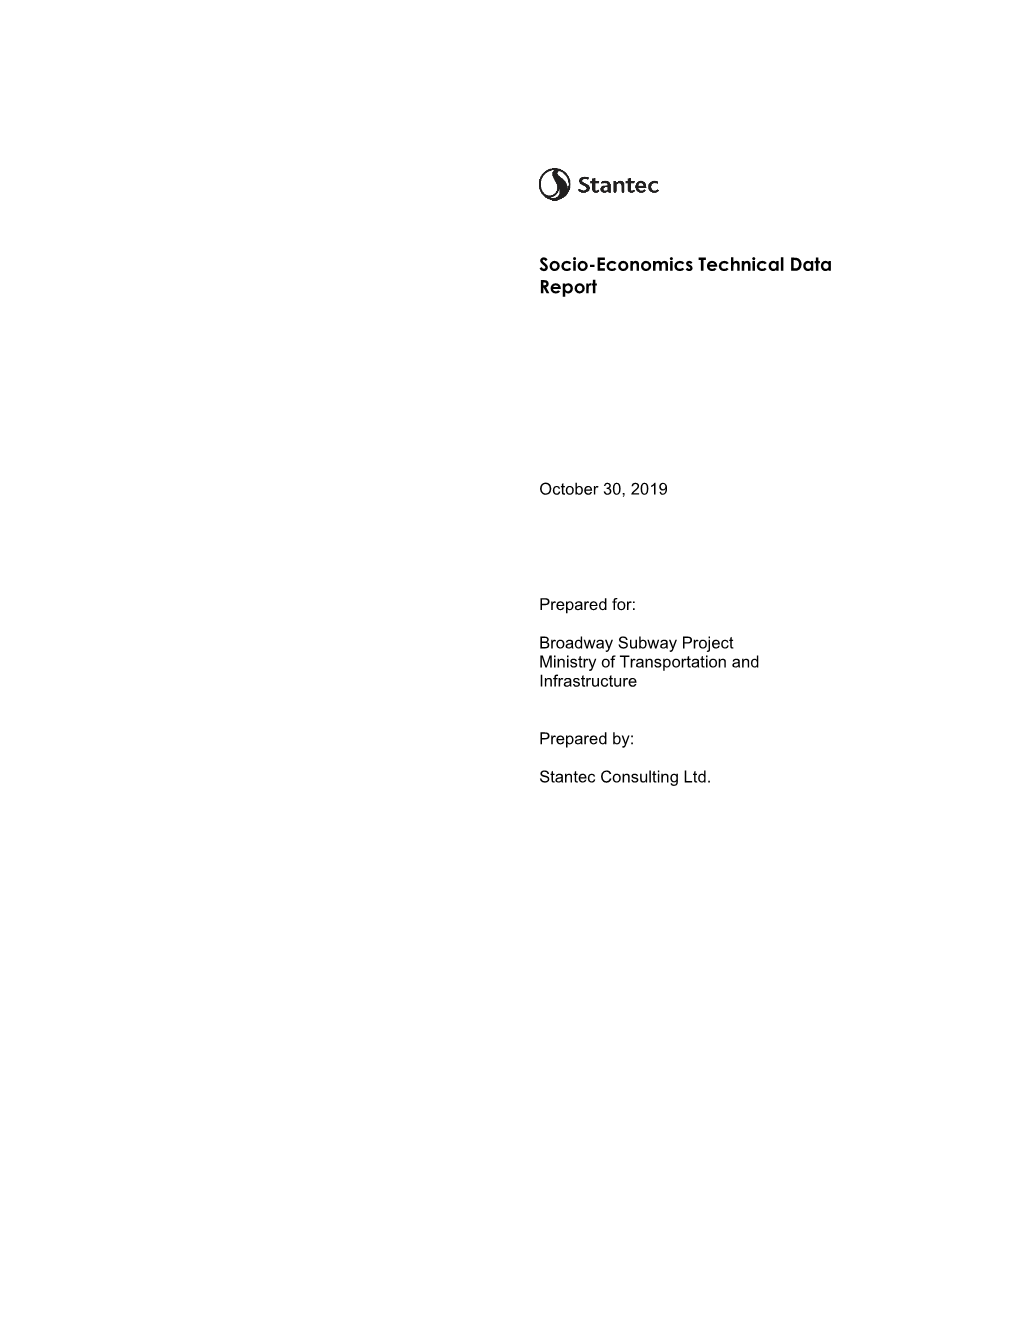 Socio-Economic Technical Data Report (October 2019)